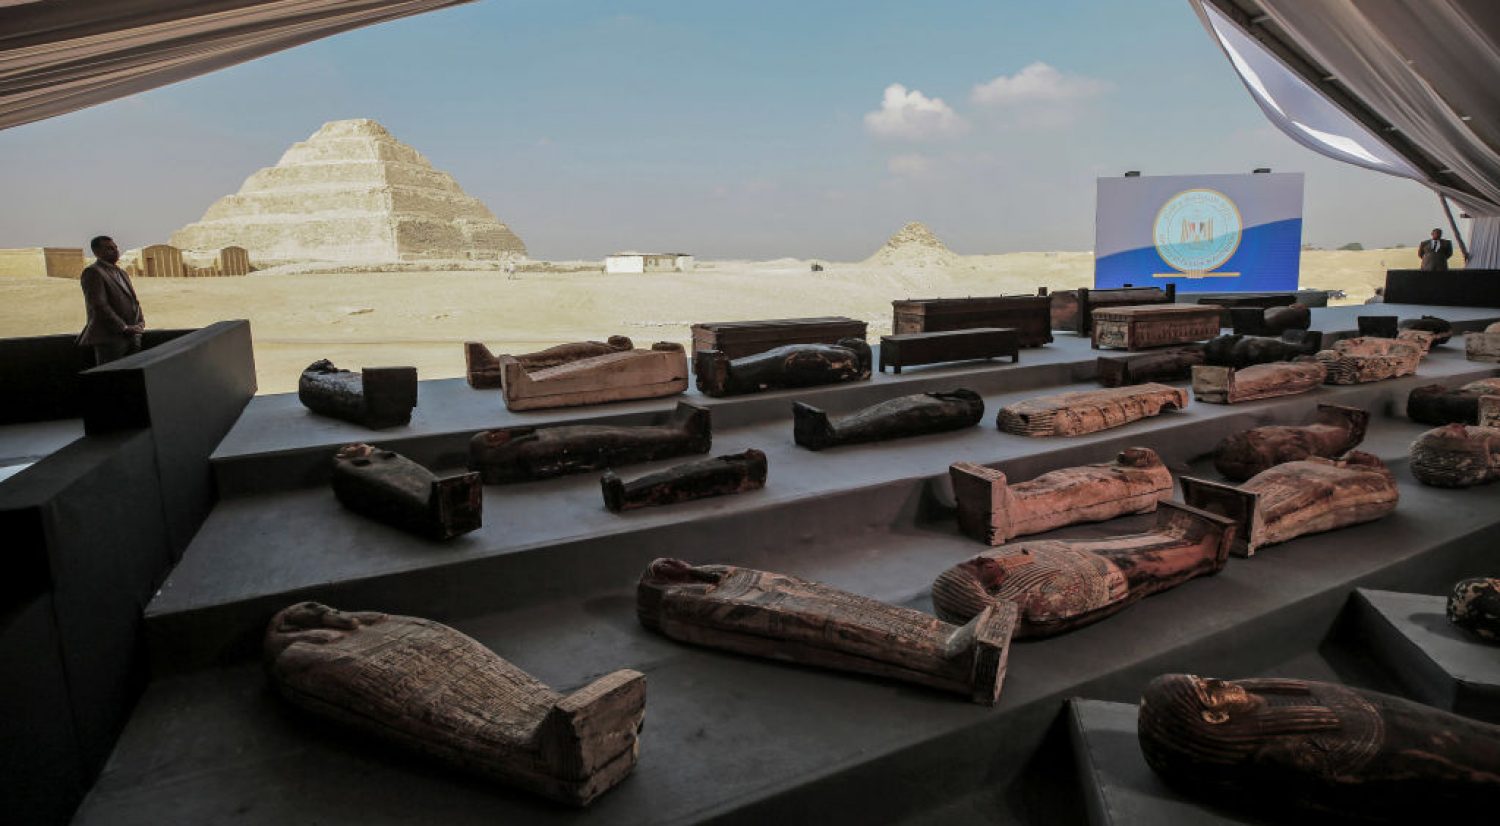 Ancient sarcophagi are displayed during a press conference at Saqqara. Photo: Fadel Dawood/dpa via Getty Images.